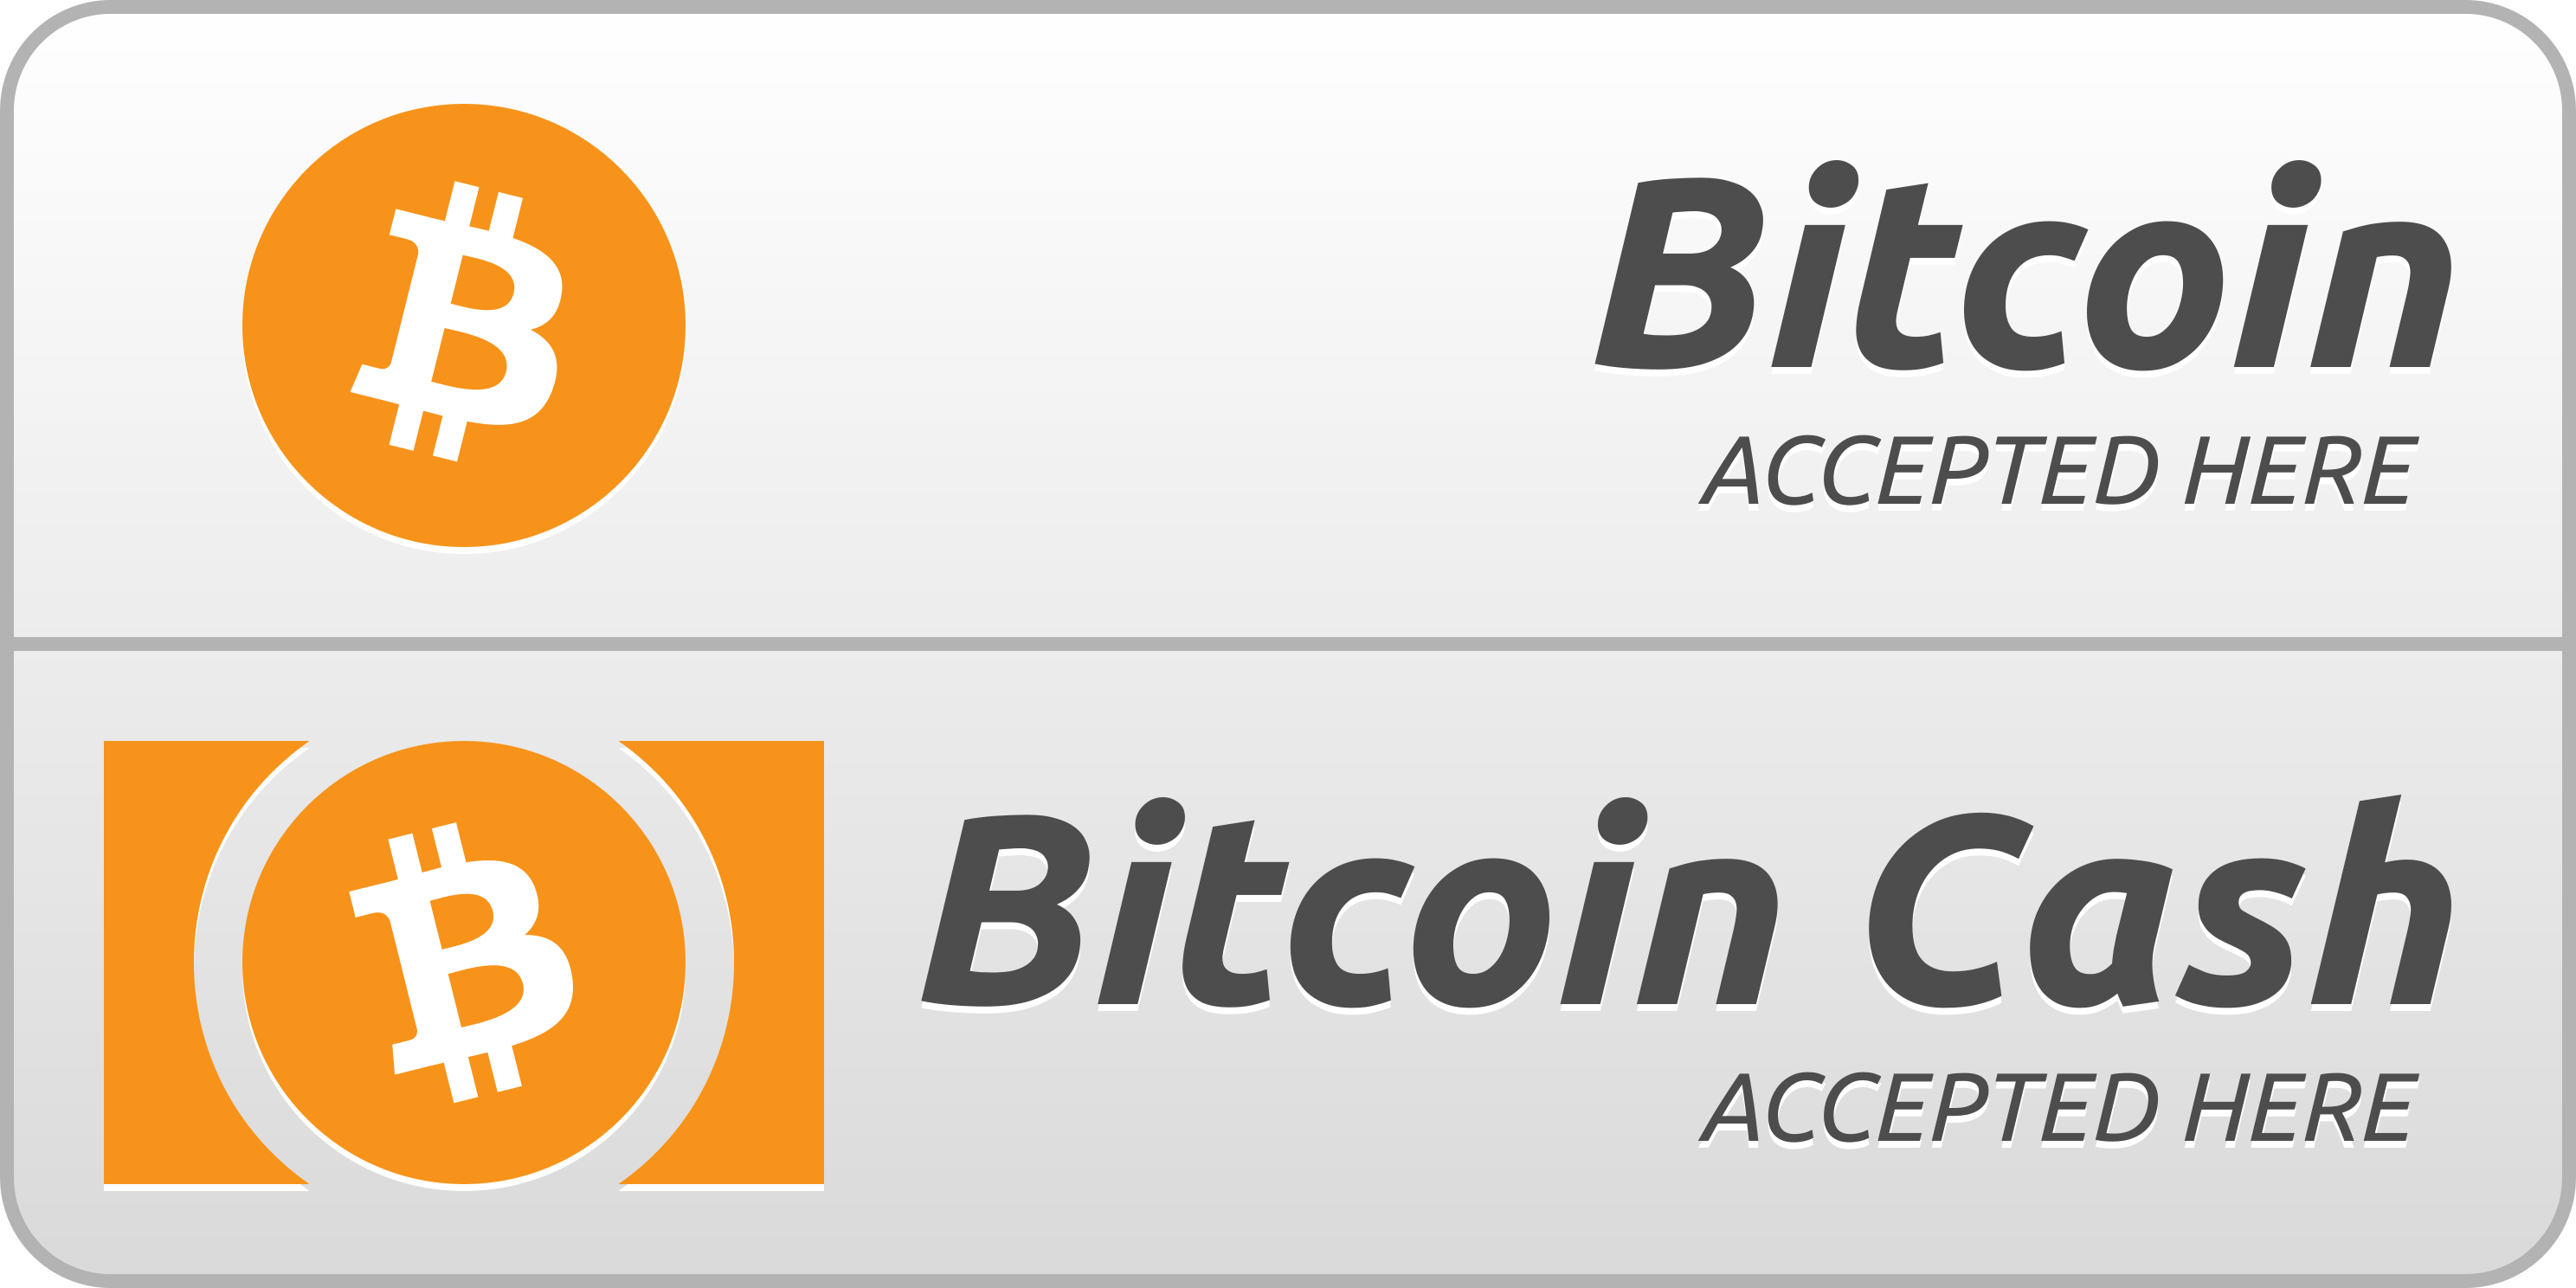 Cash Accepted Logo - Accept Large Bitcoin Bitcoincash Round, Bitcoin Cash